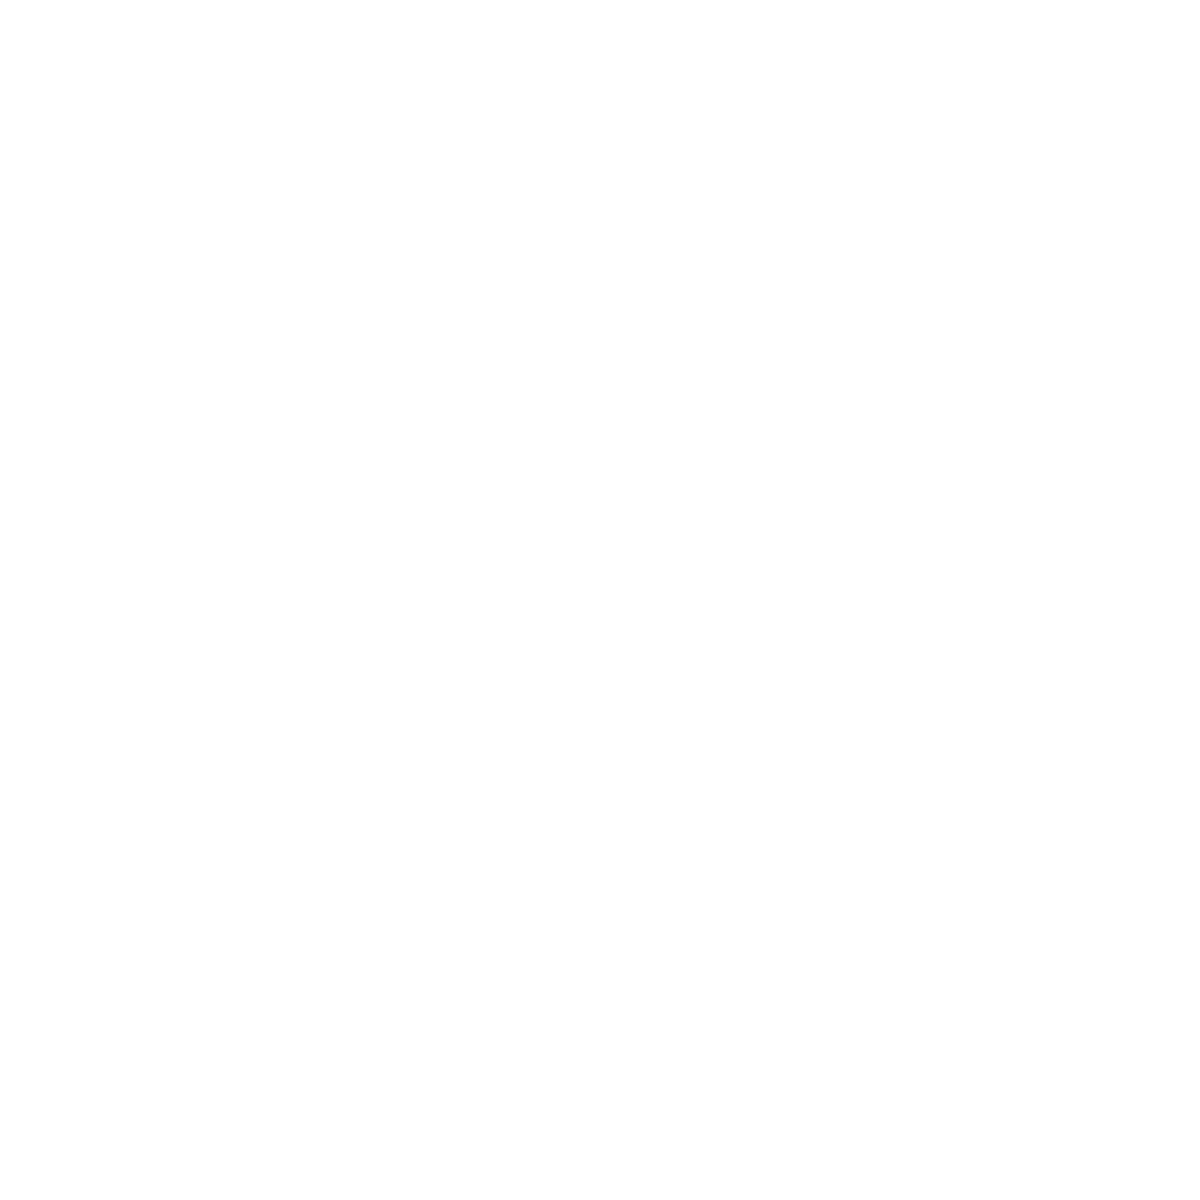 Cabo logo white.png